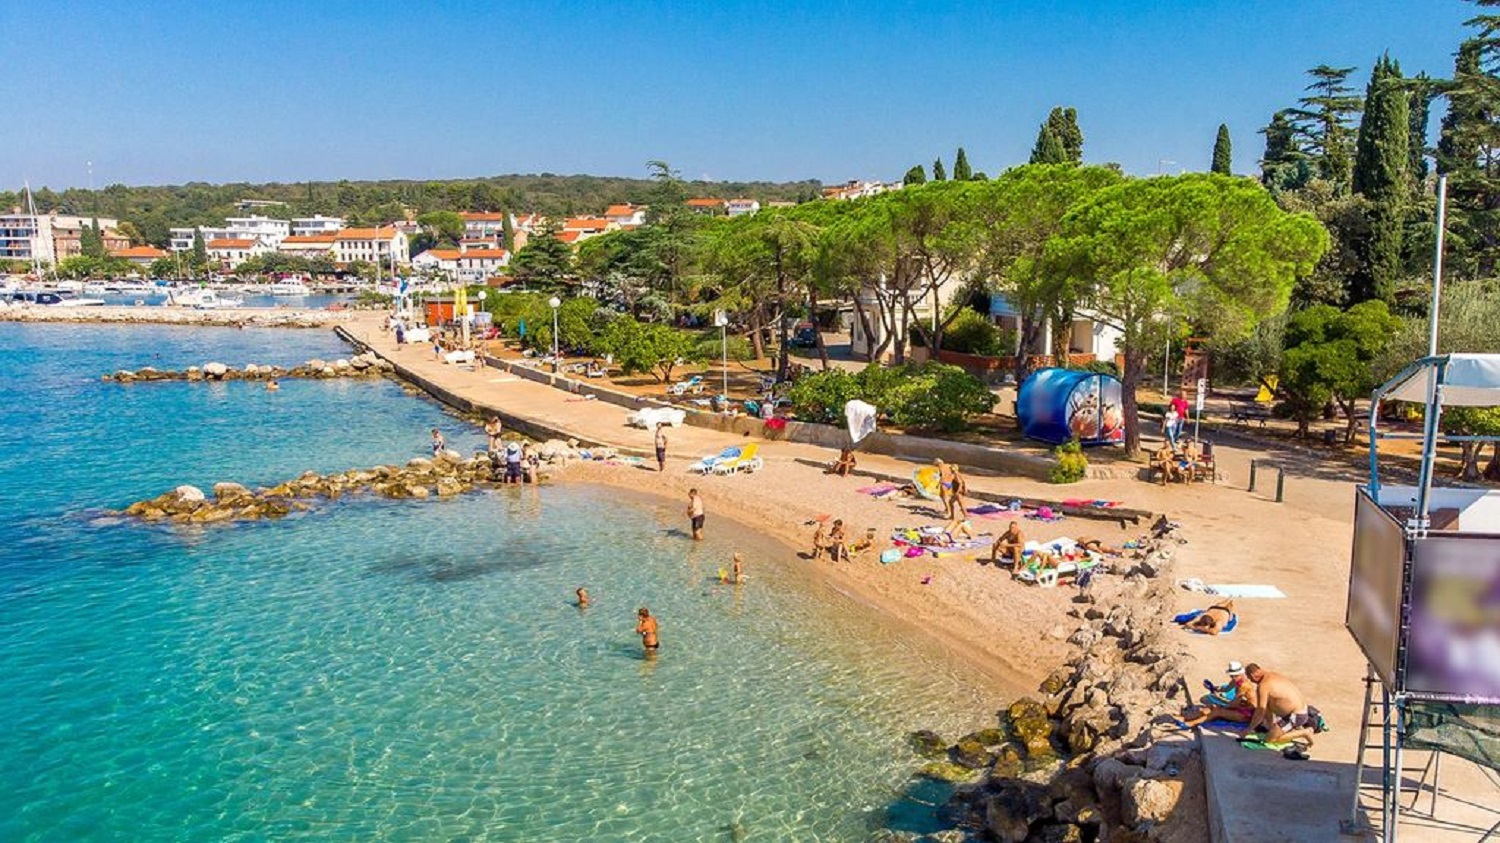 Holiday villa with pool in Croatia, beach and promenade by the sea in Malinska